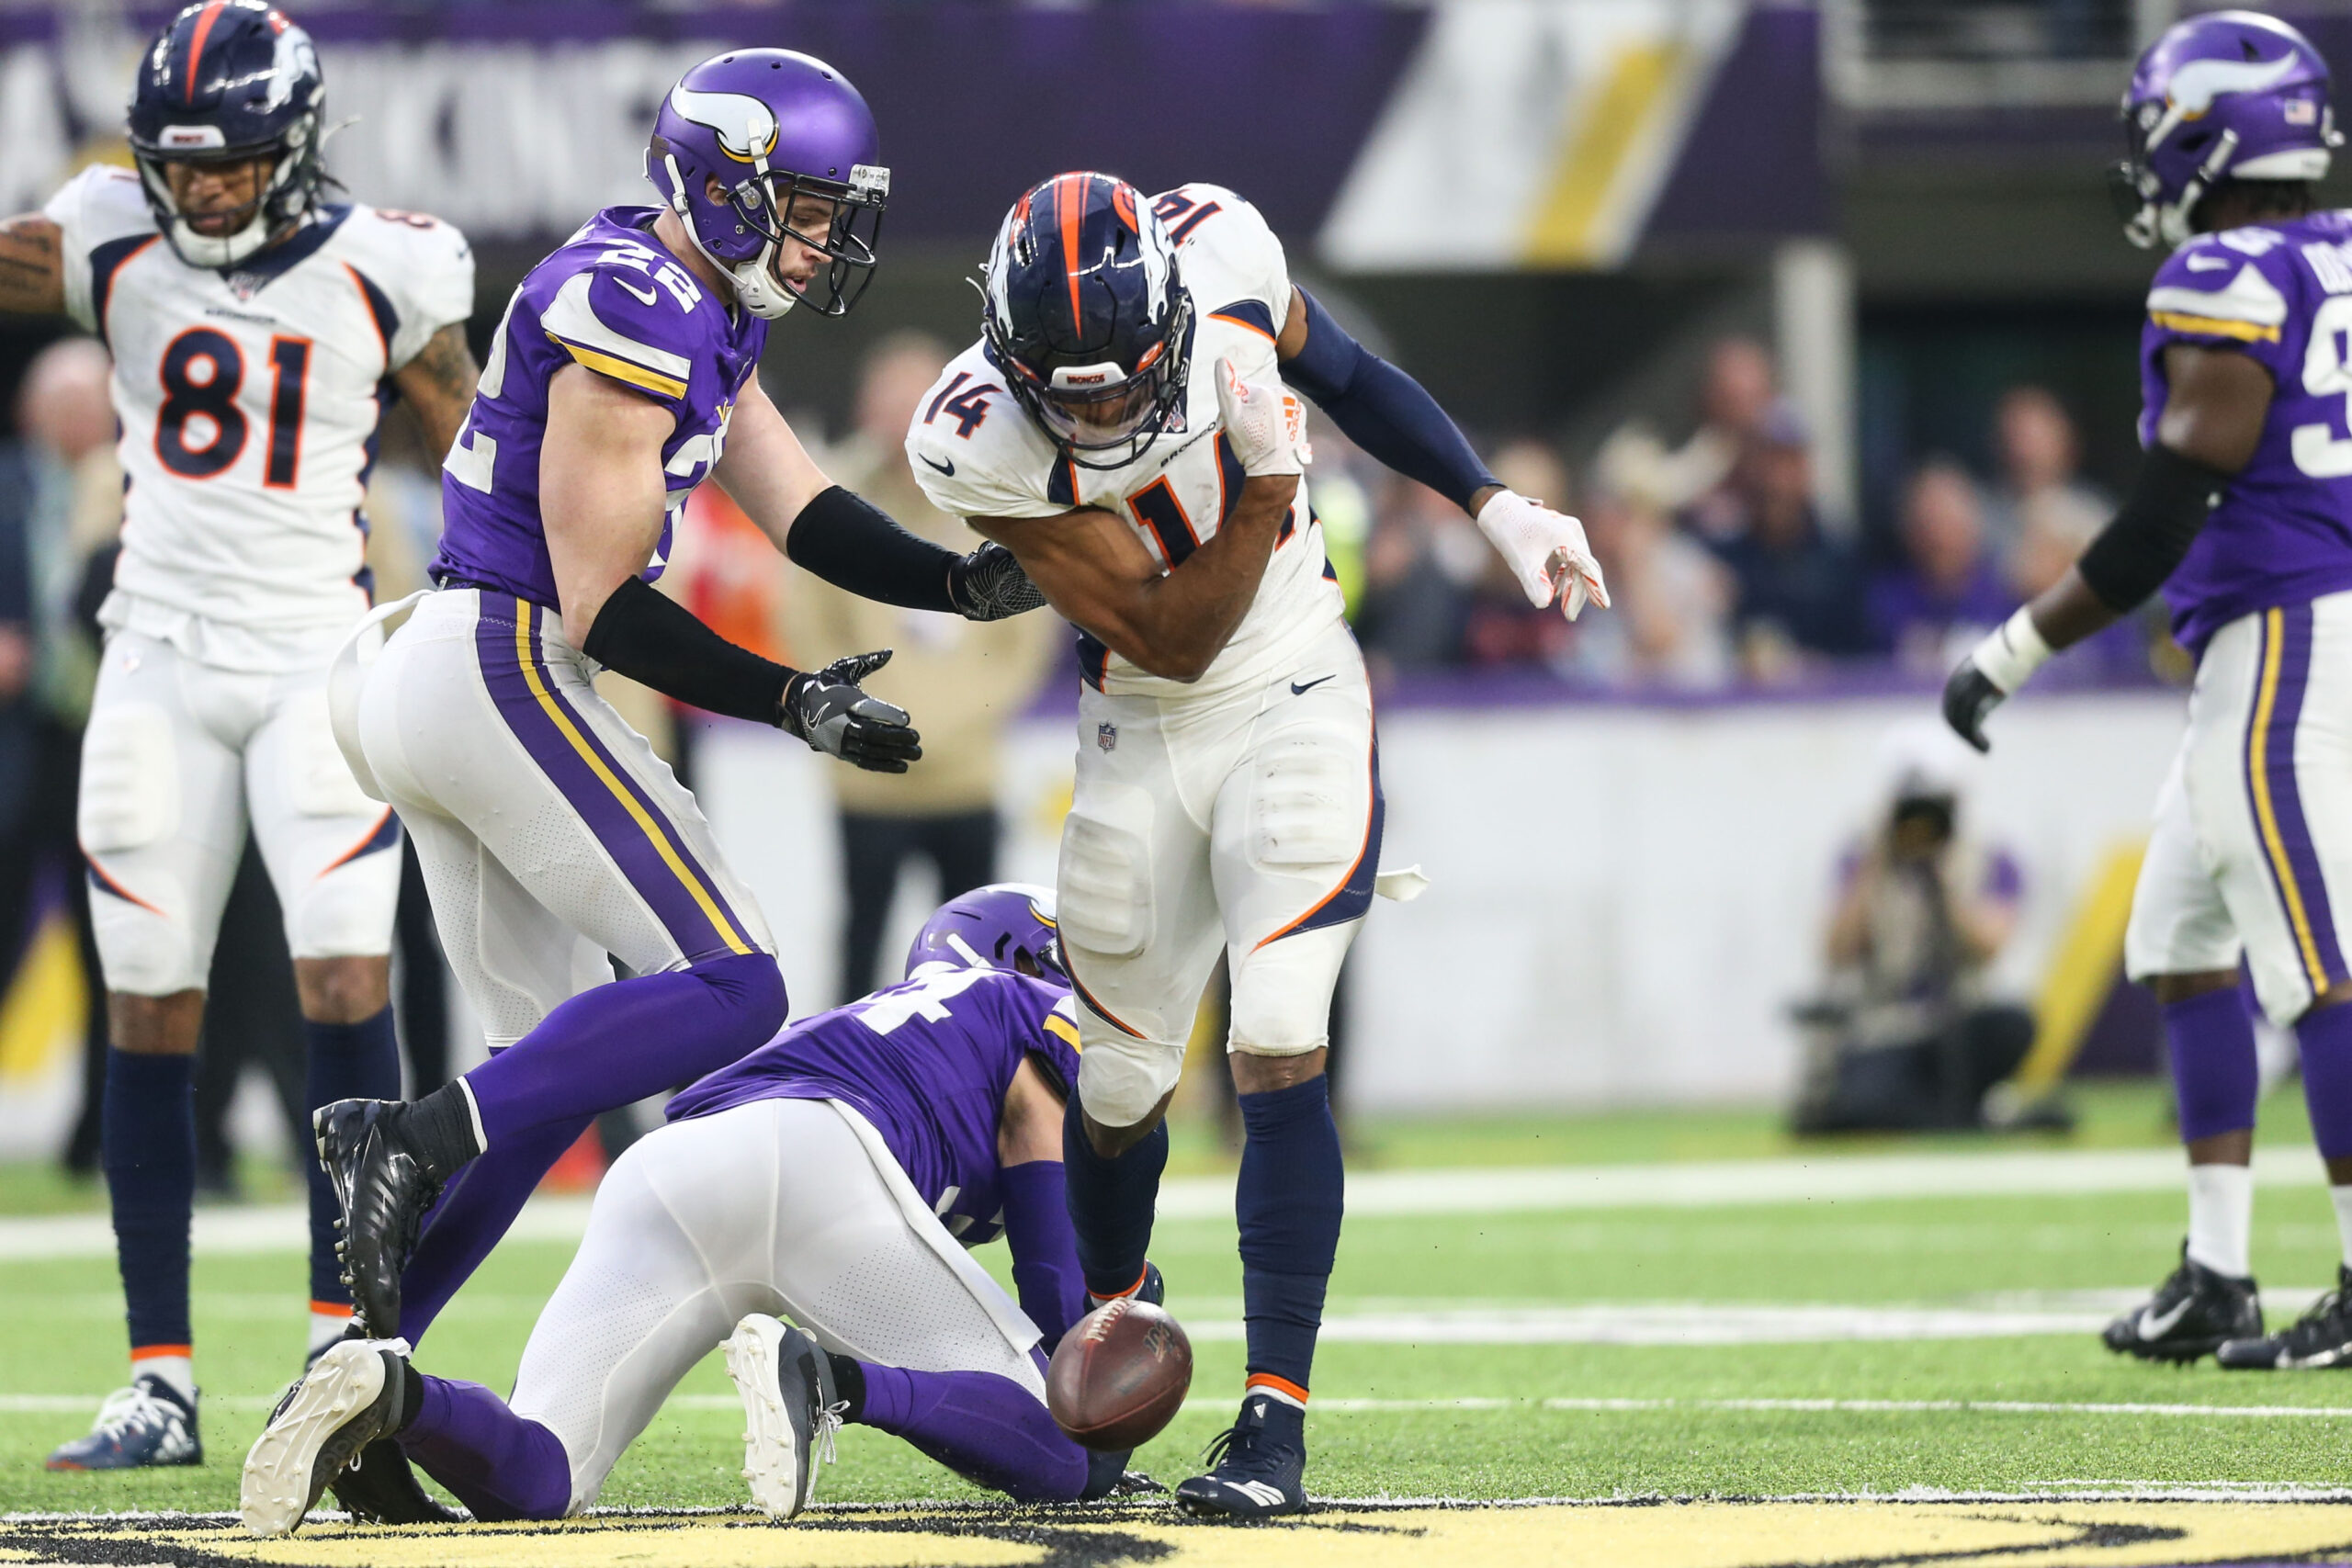 With 31 players sitting, Vikings lose preseason opener to Broncos 33-6